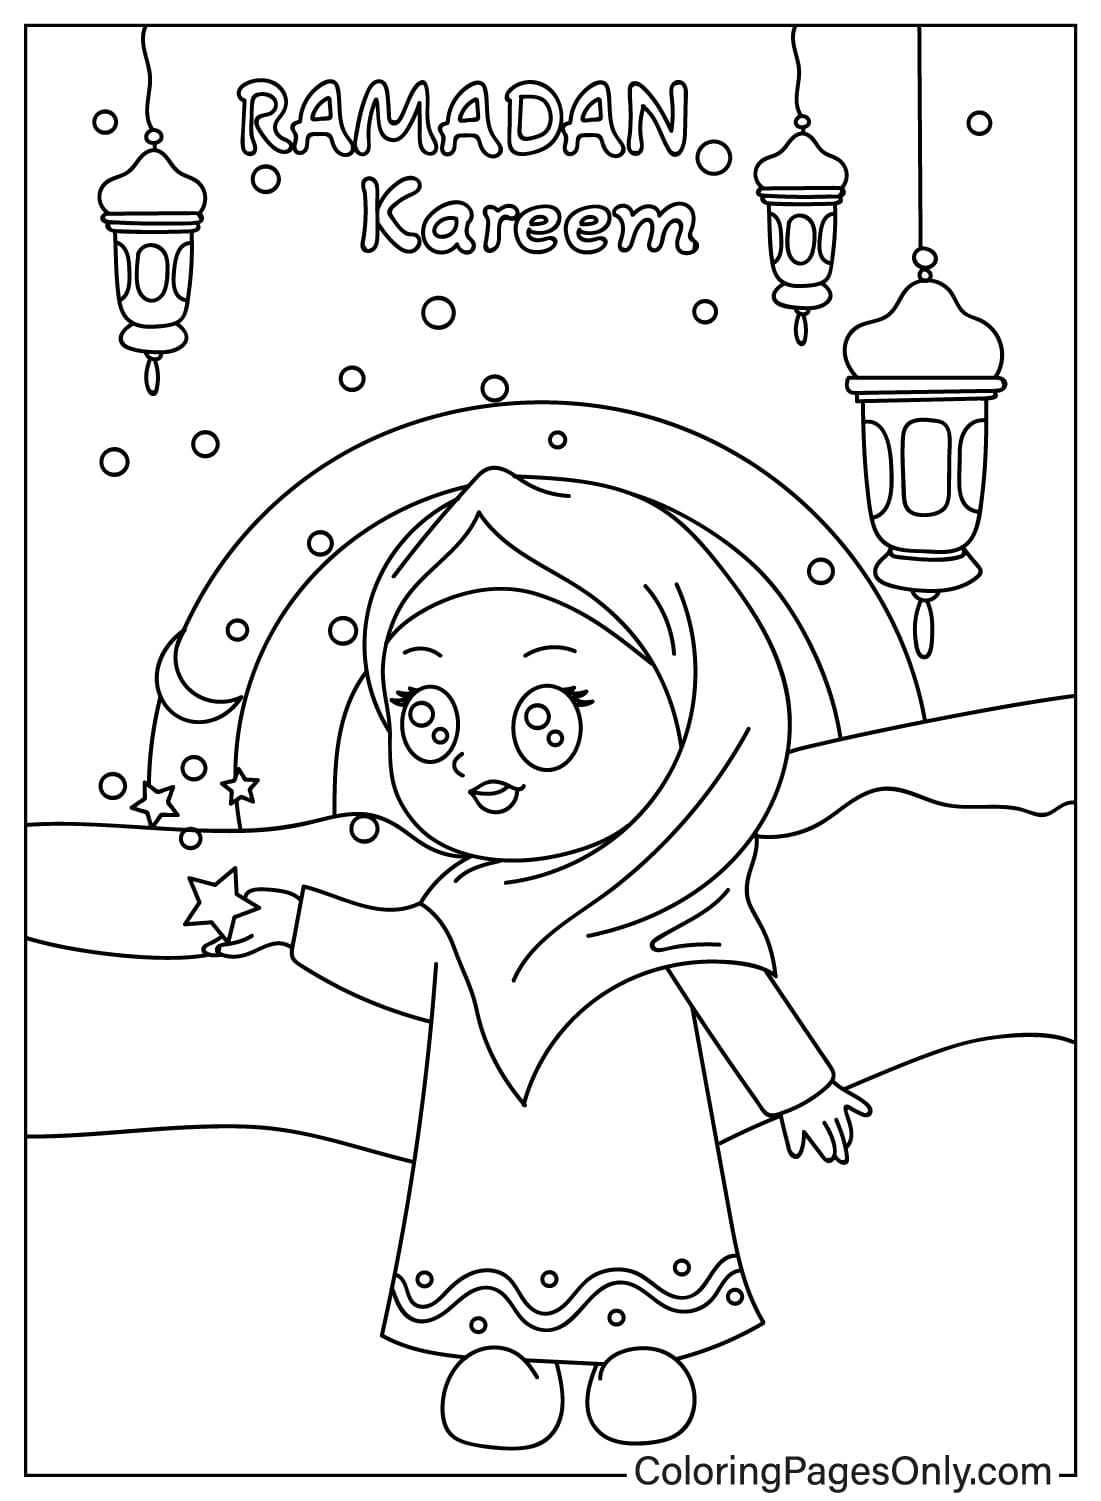 Ramadan Kareem Coloring Page from Ramadan